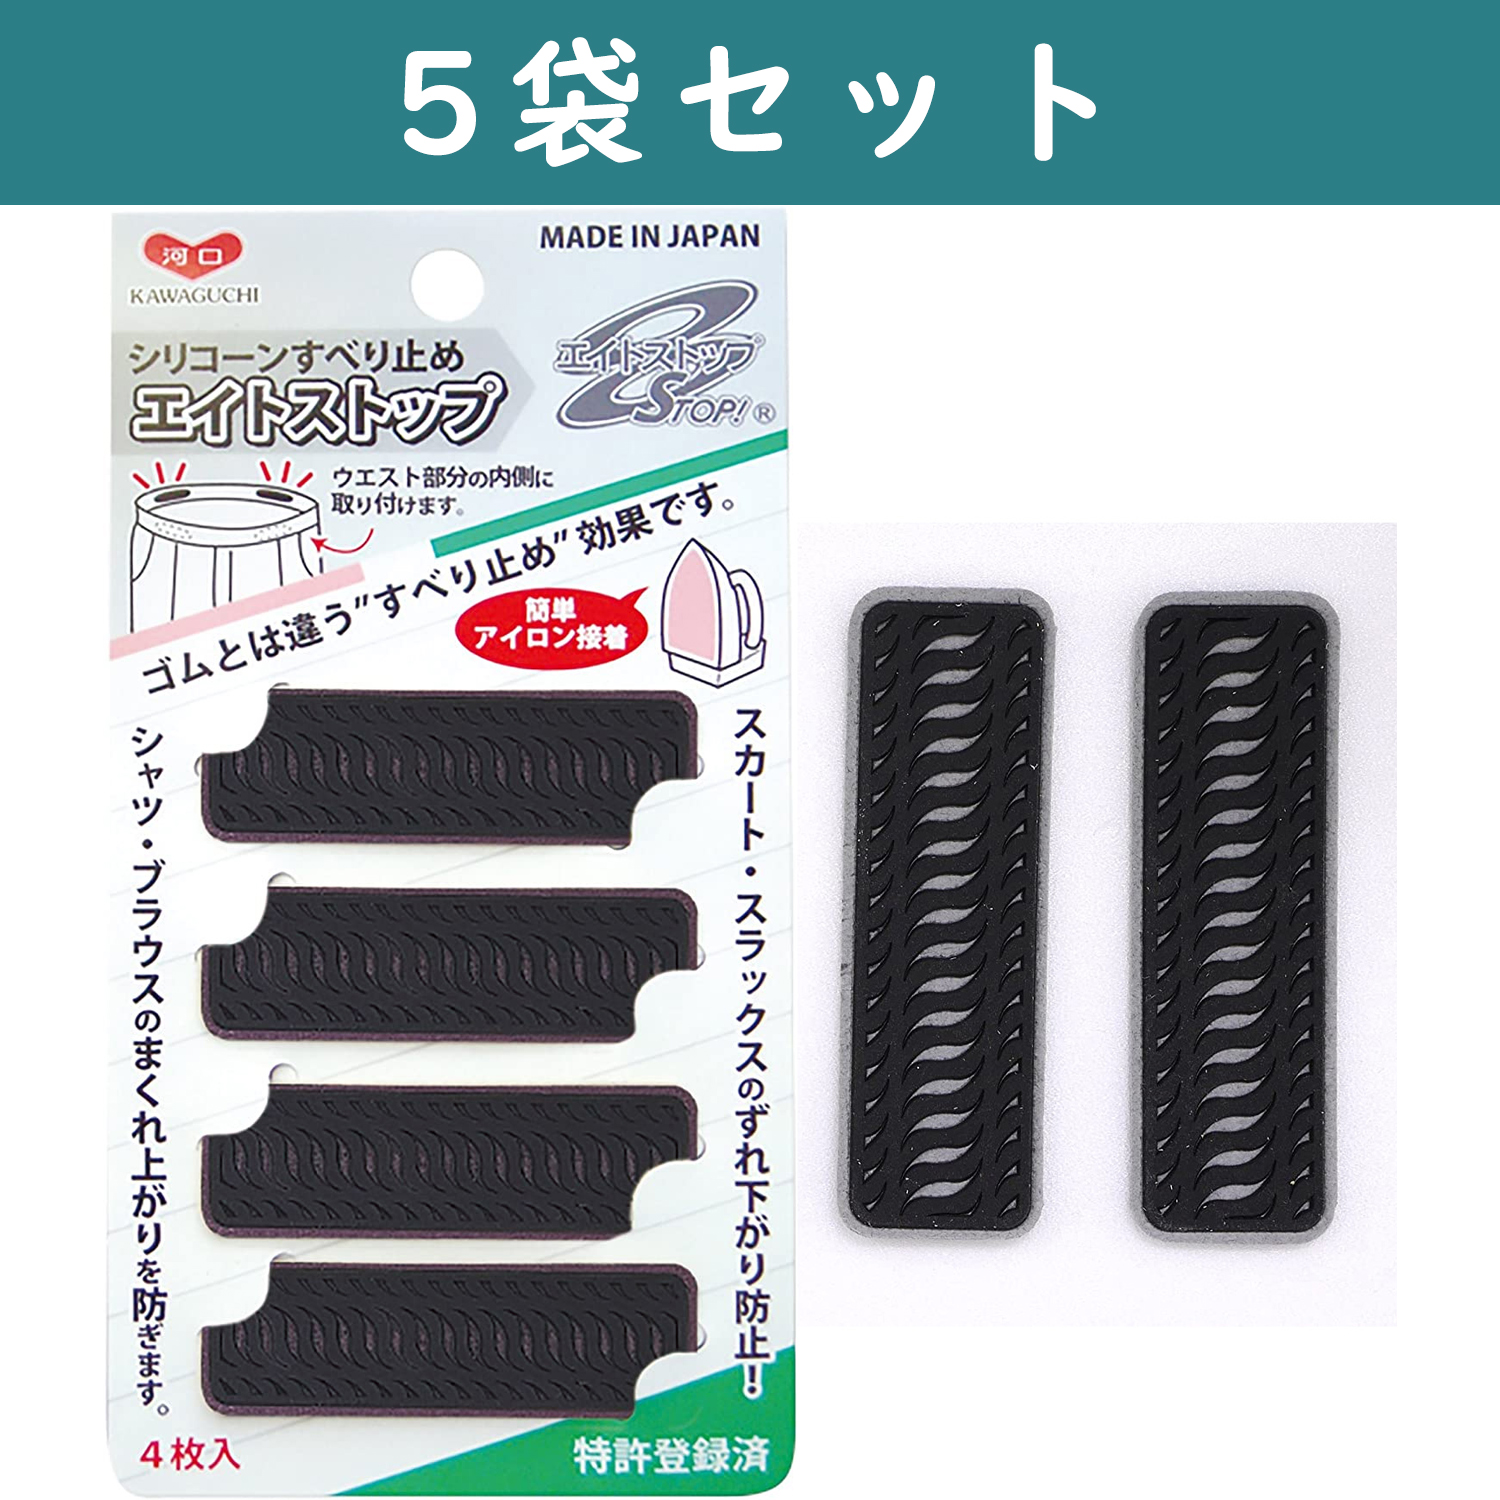 TK80017-5 KAWAGUCHI Eight Stop Silicone Anti-Slip Thermal Adhesive Type 4 pcs x 5 Bags Set Black (Set)